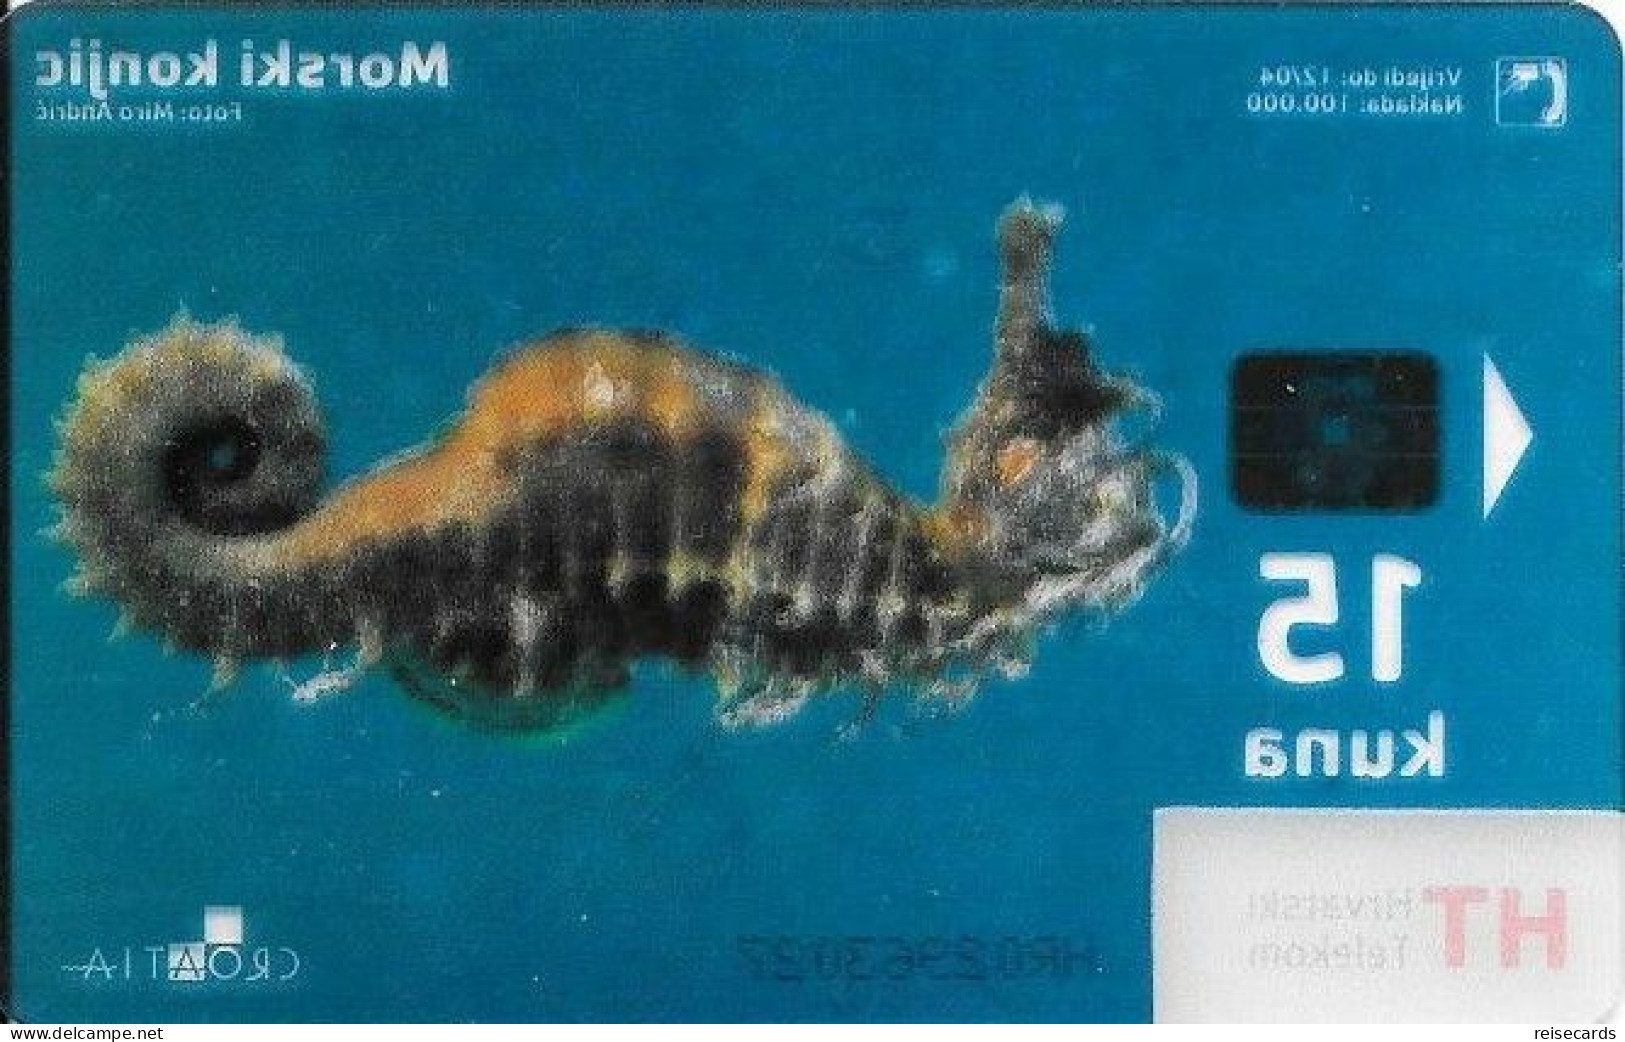 Croatia: Hrvatski Telekom - Underwater World, Morski Konjic. Transparent - Croatie